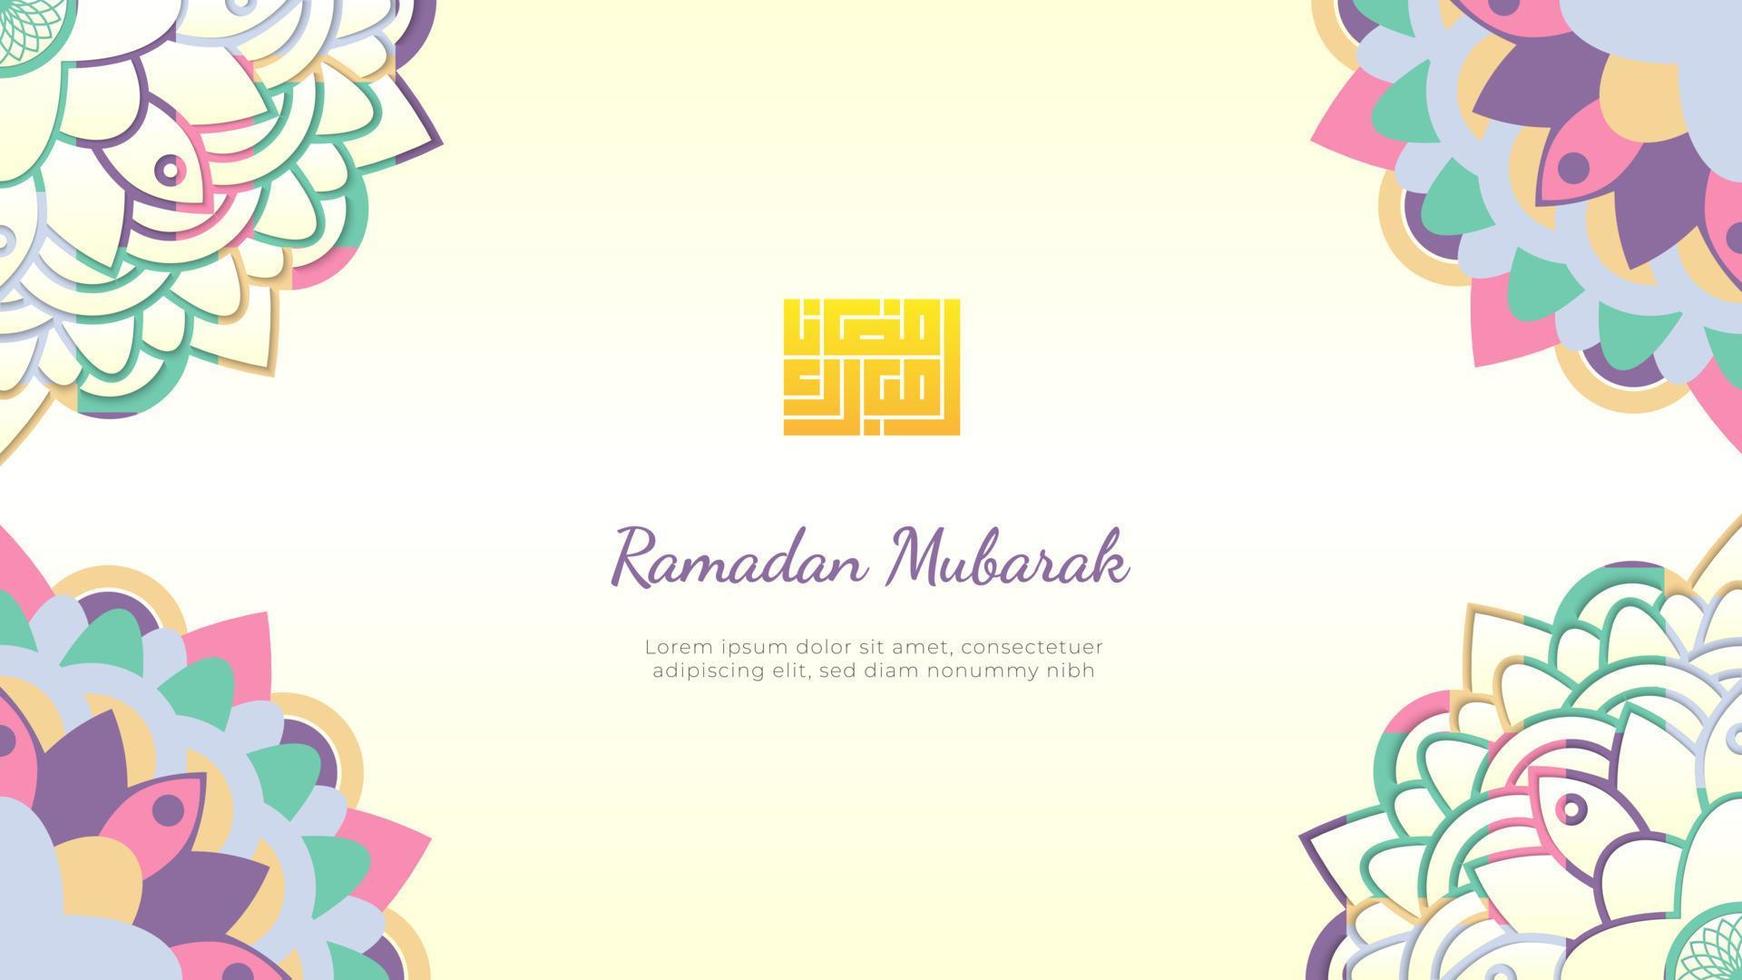 Ramadan Mubarak greeting background with flat and cut out style mandala vector